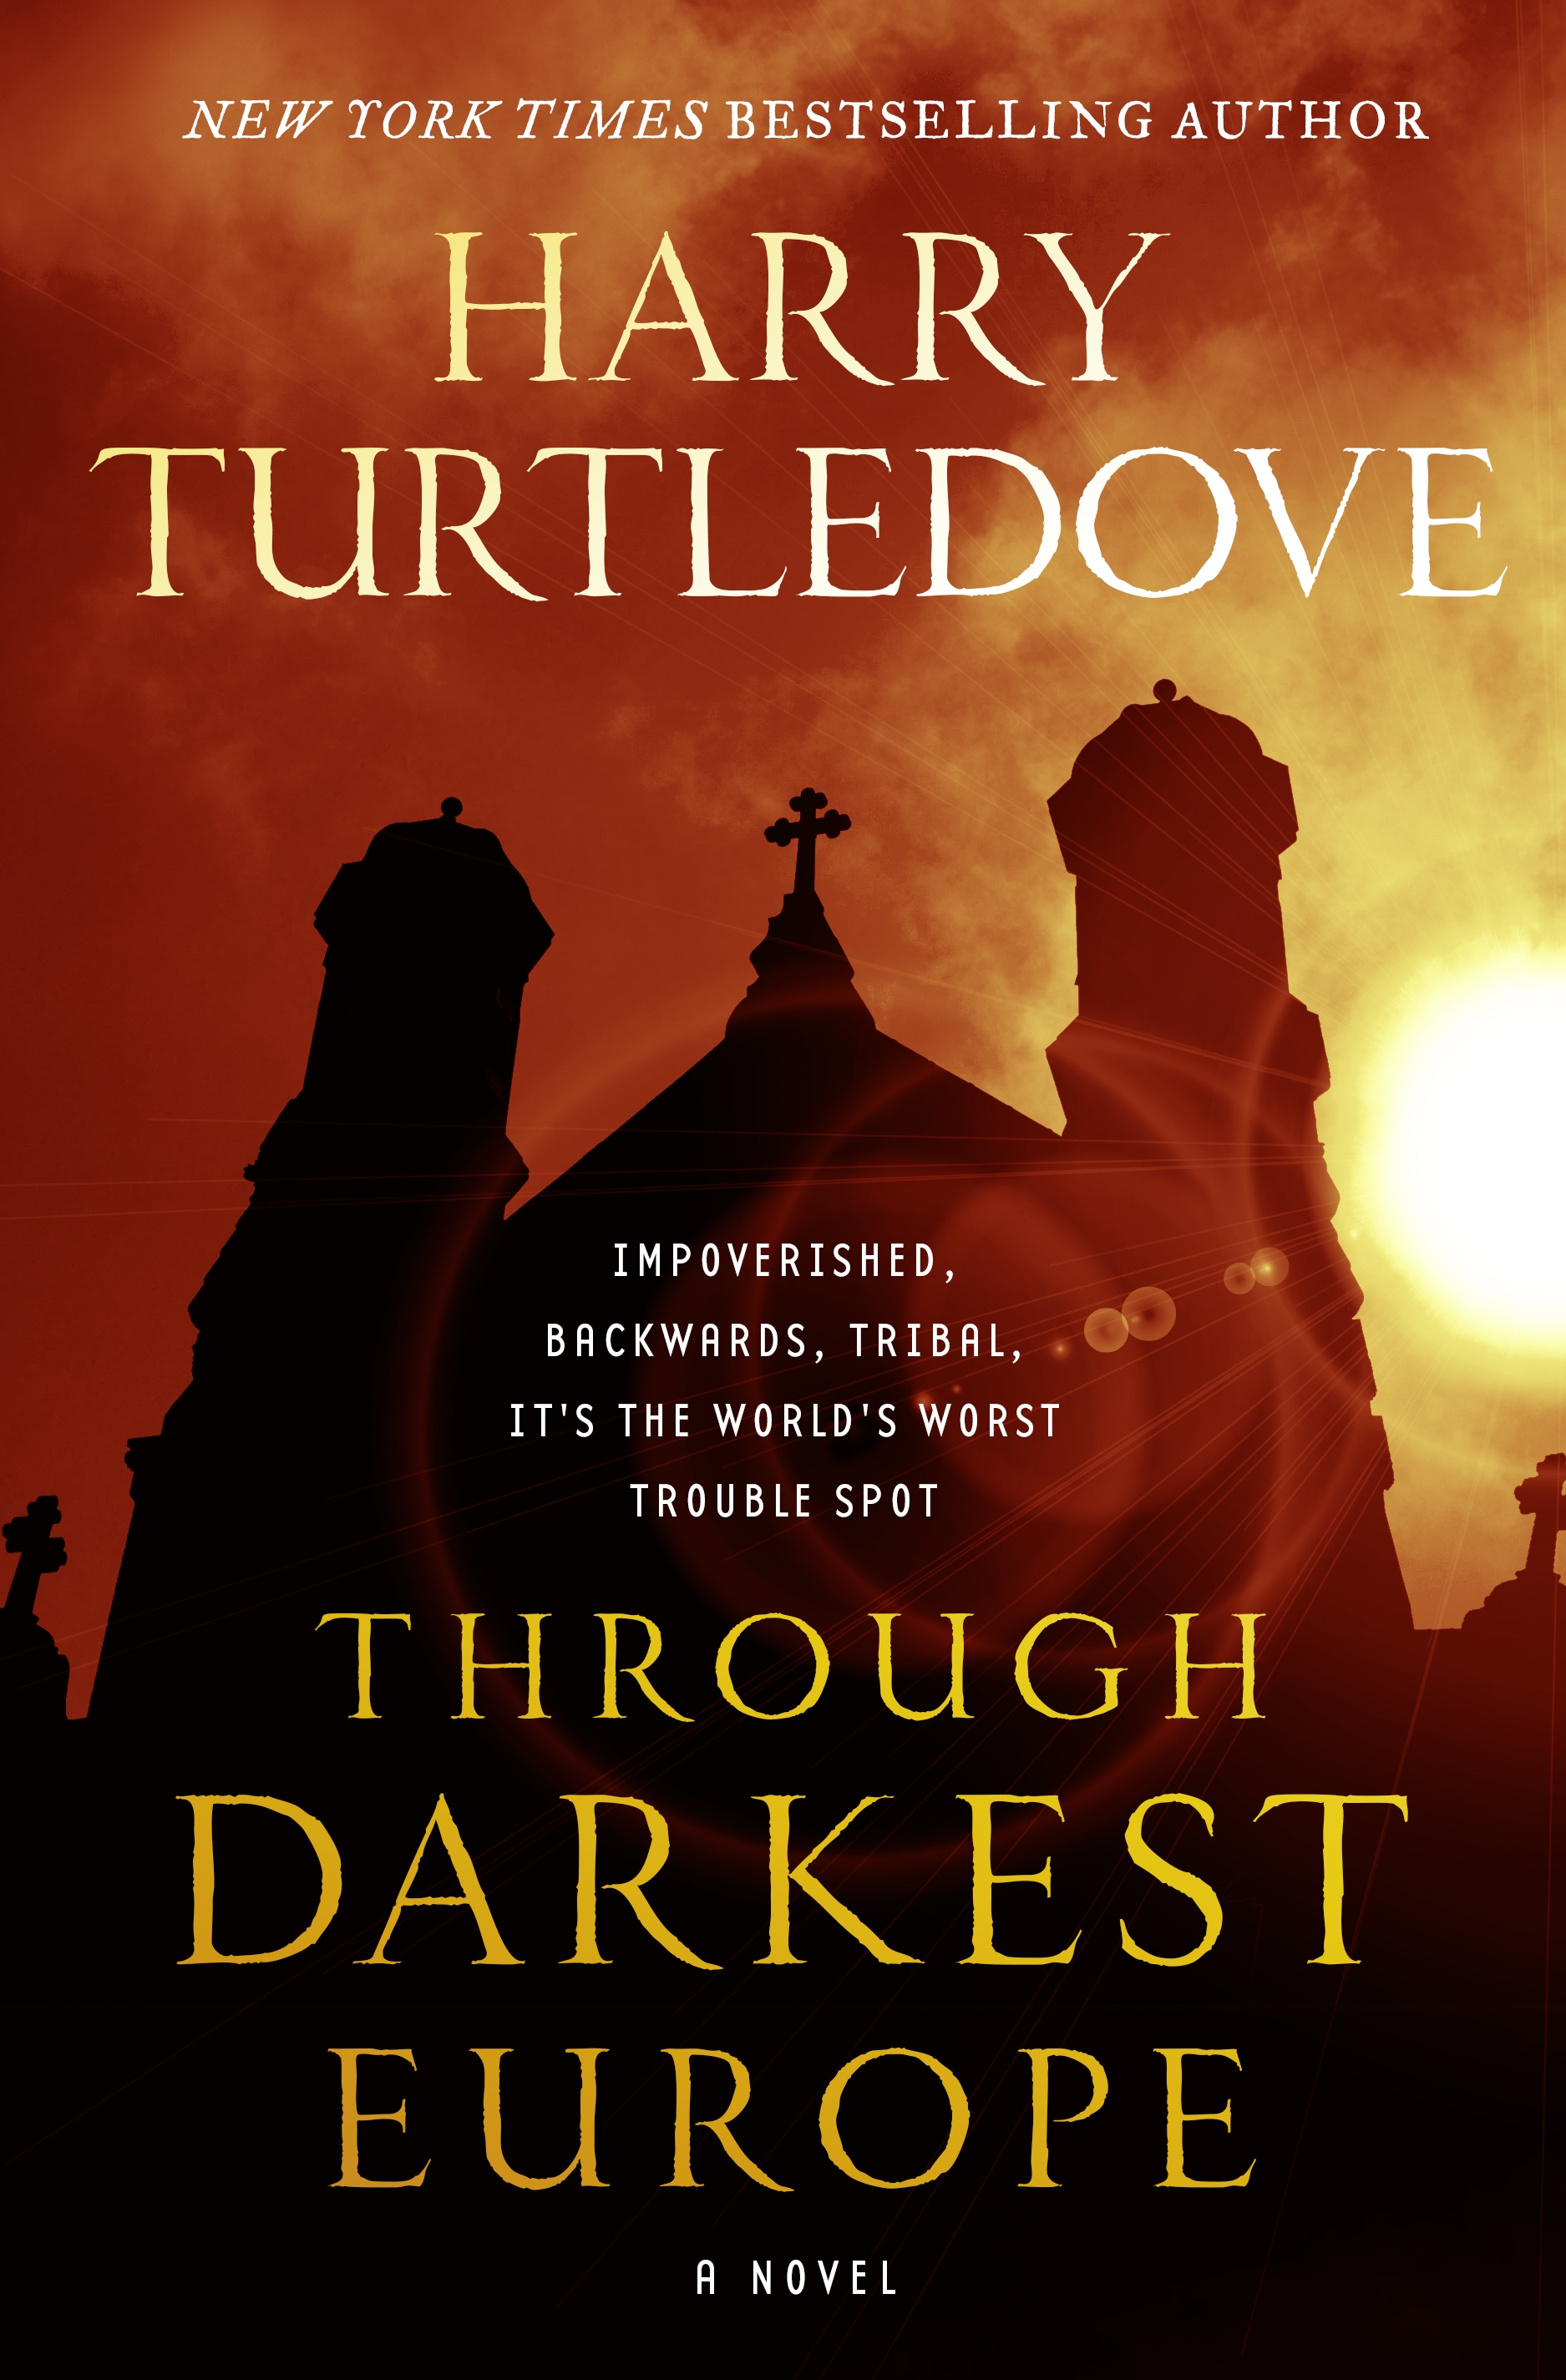 Through Darkest Europe : A Novel by Harry Turtledove